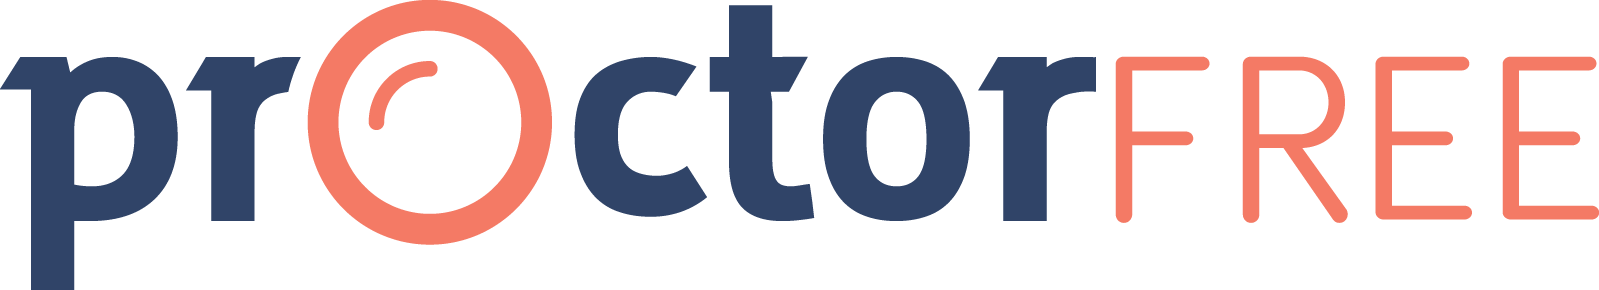 Proctor Logo - ProctorFree - Secure Online Proctoring